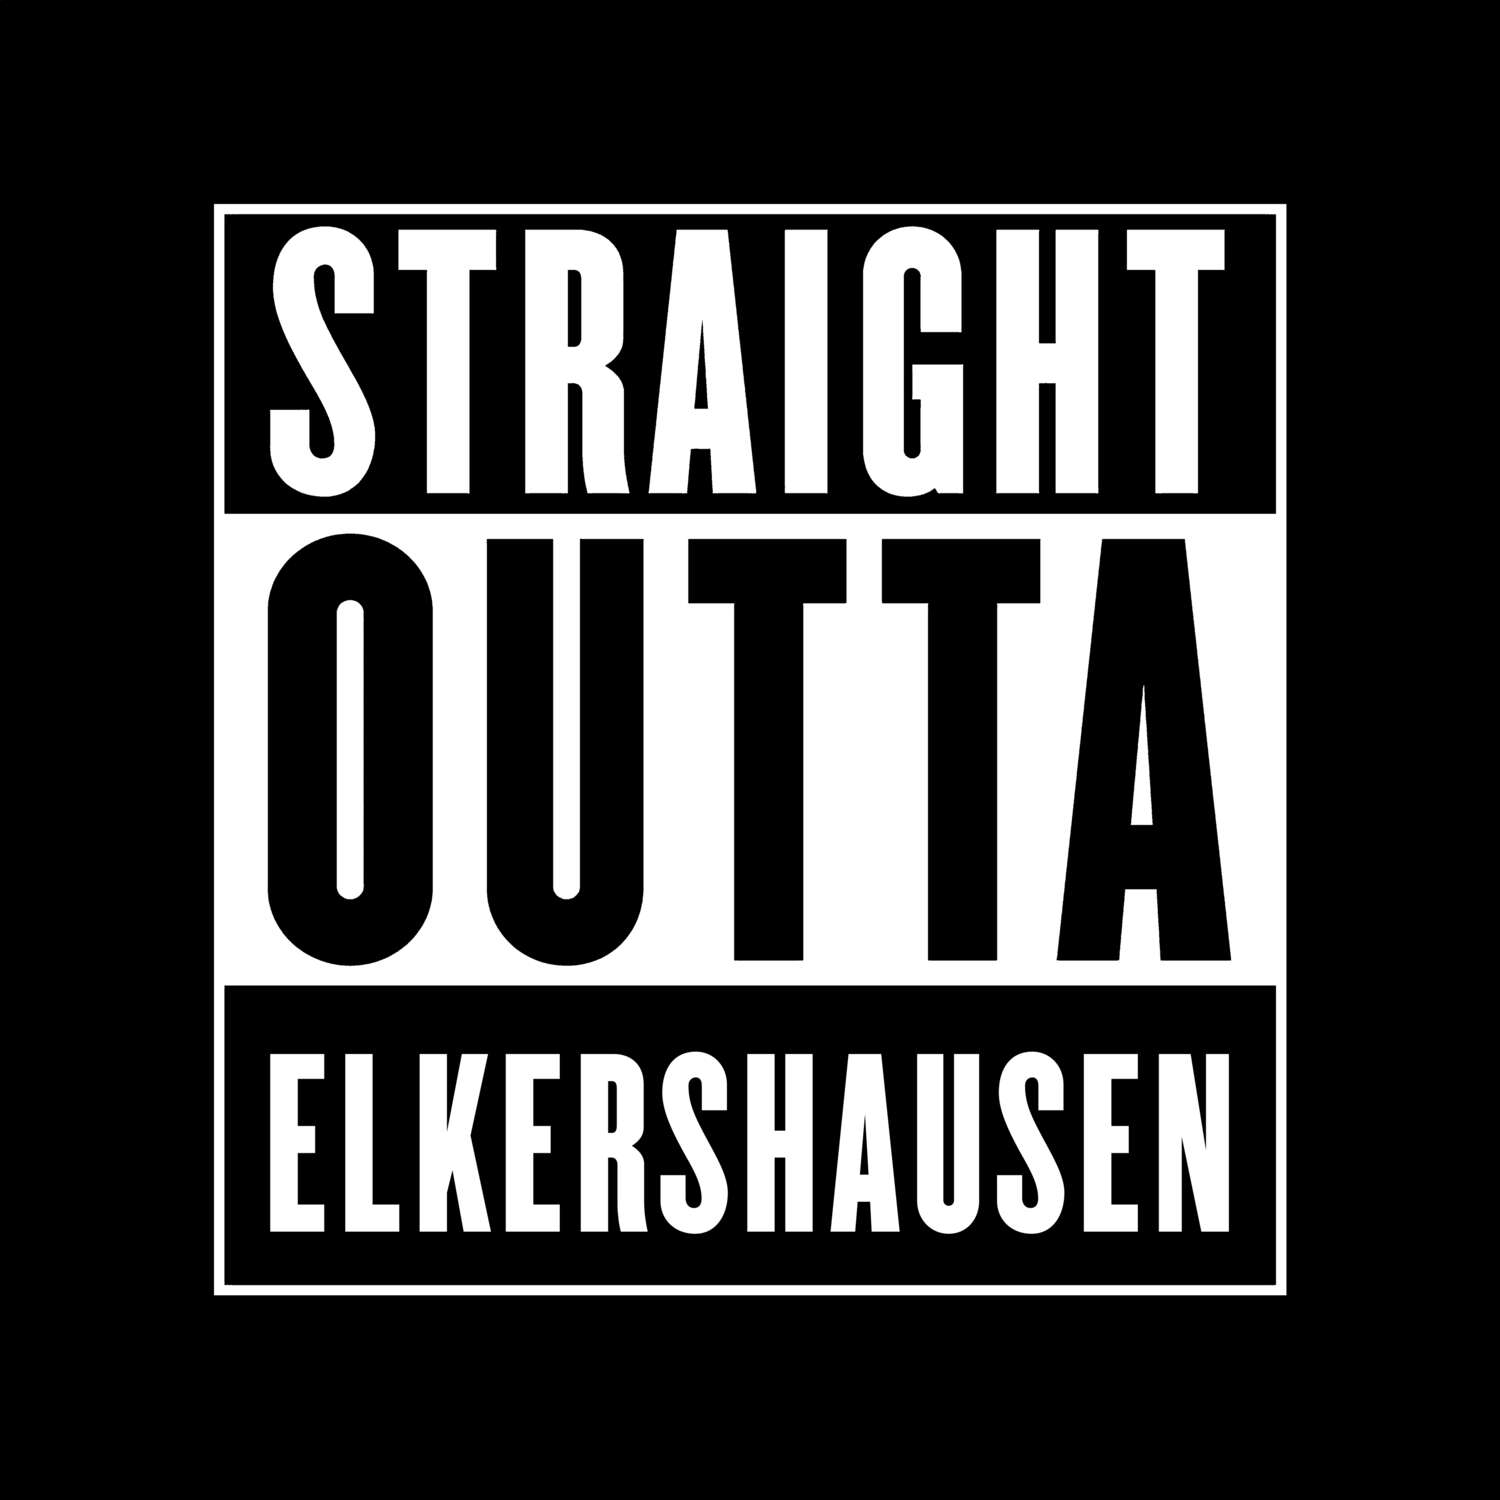 Elkershausen T-Shirt »Straight Outta«